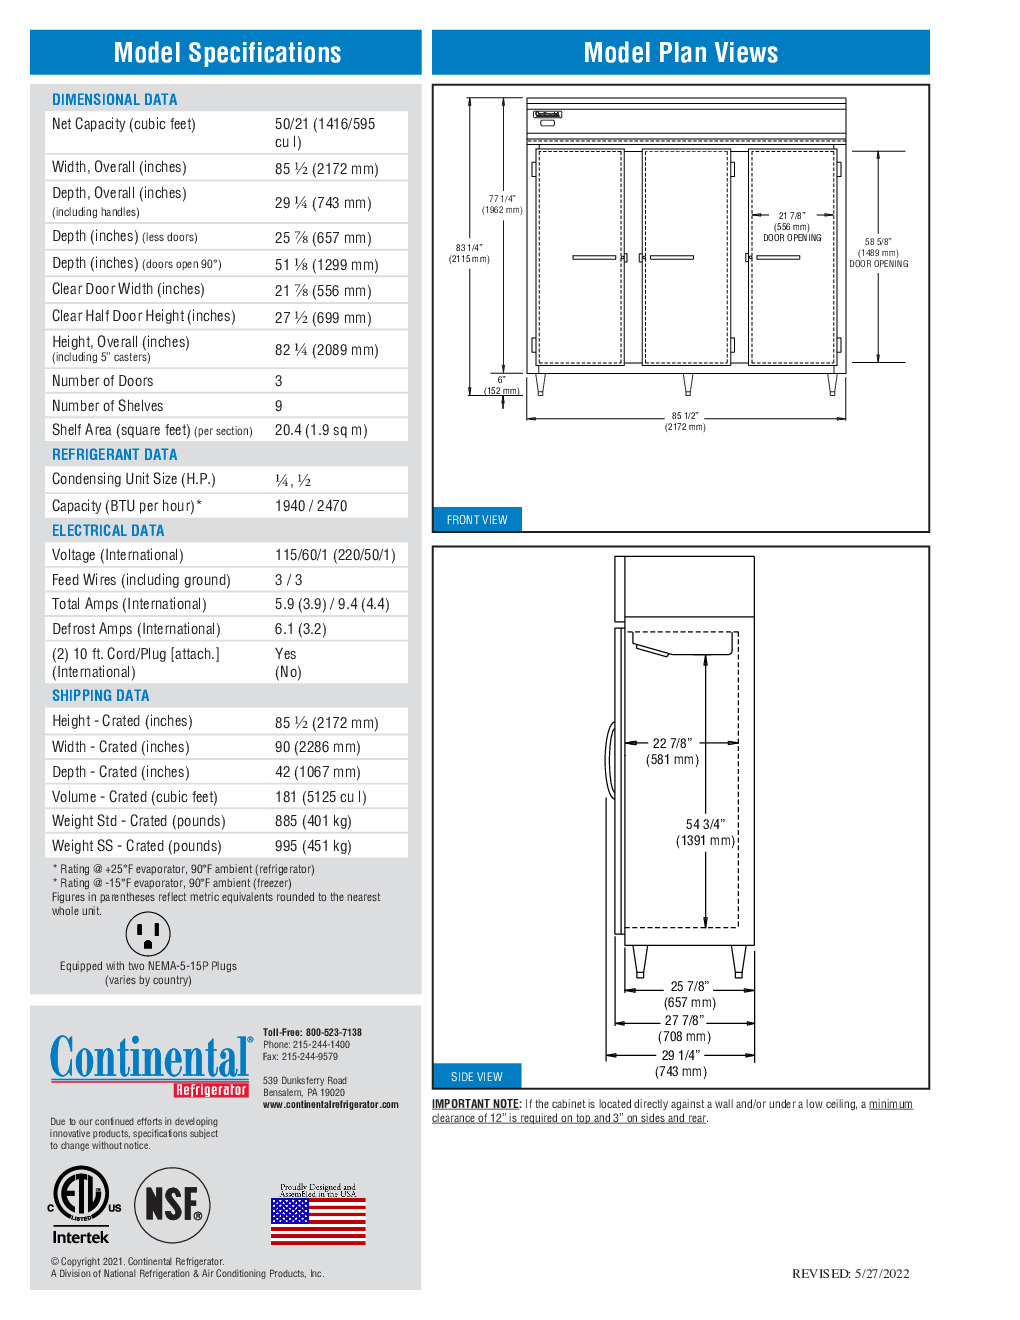 Continental Refrigerator DL3RFFES 85